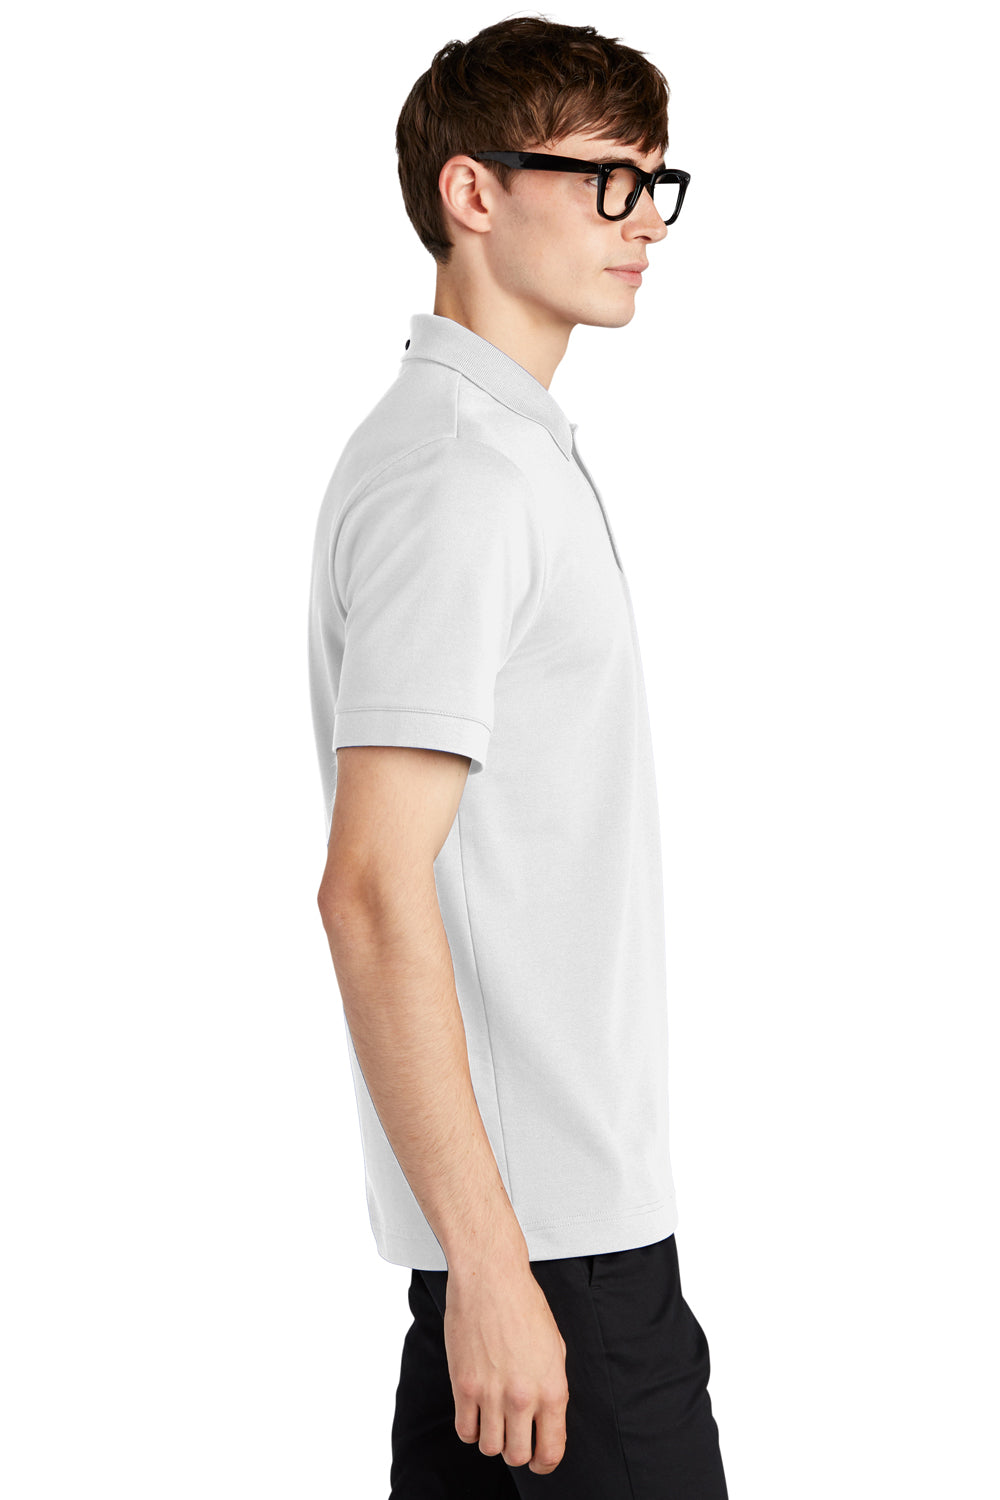 Mercer+Mettle MM1000 Stretch Pique Short Sleeve Polo Shirt White Side